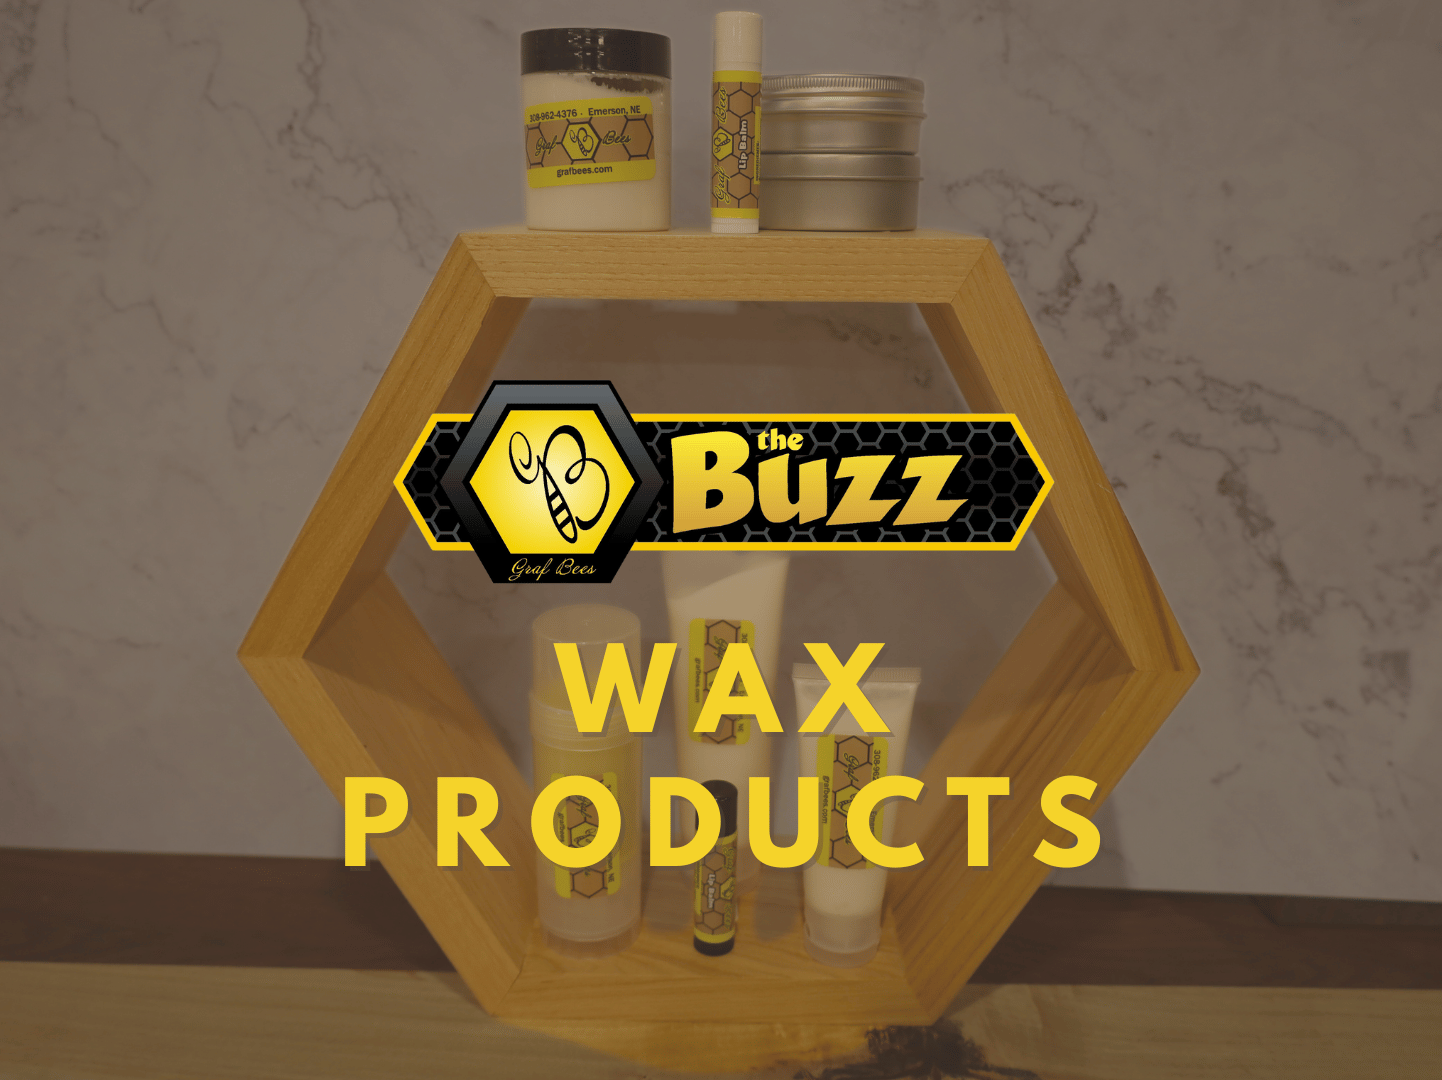 Wax Products